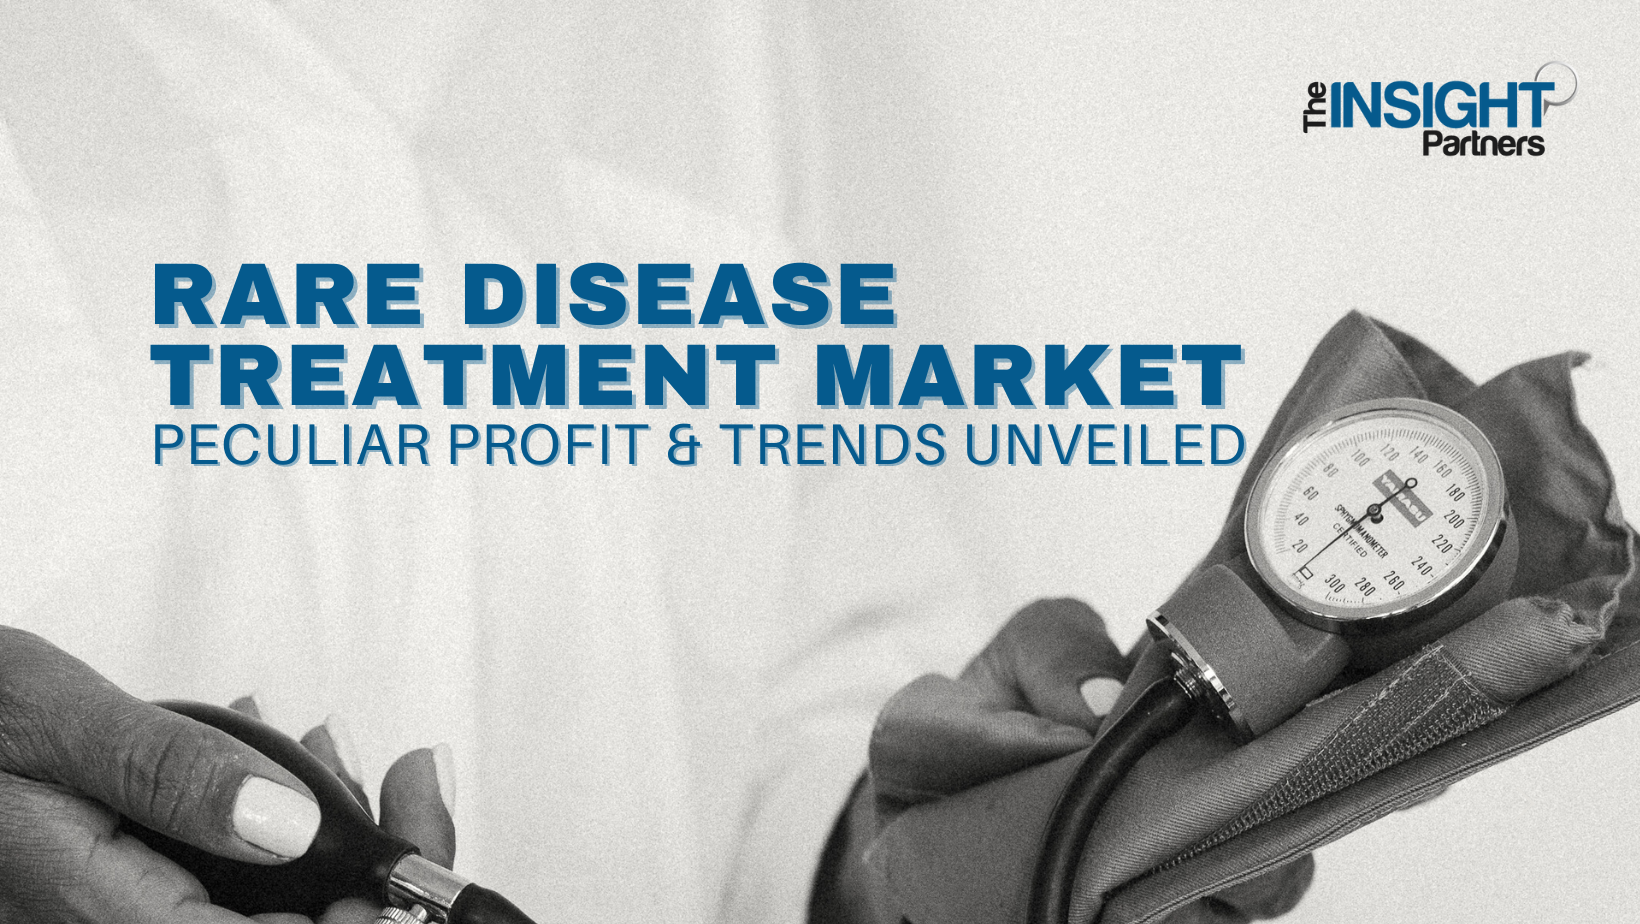 Rare Disease Treatment Market - Peculiar Profit & Trends Unveiled